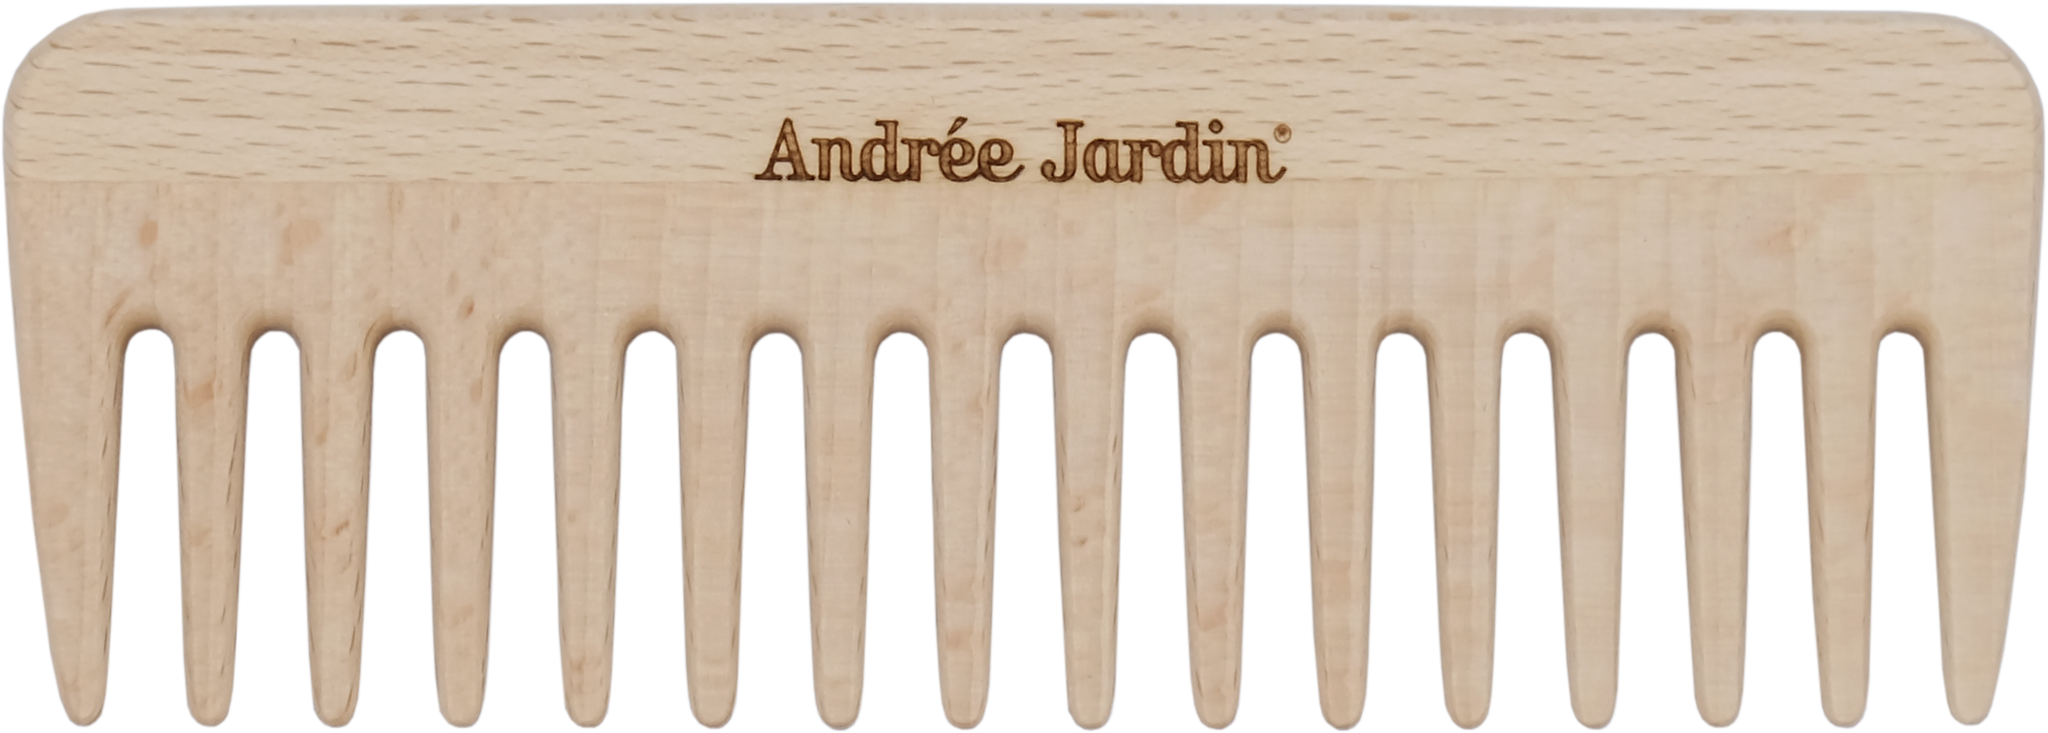 Andrée Jardin Beech Wood Hair Comb